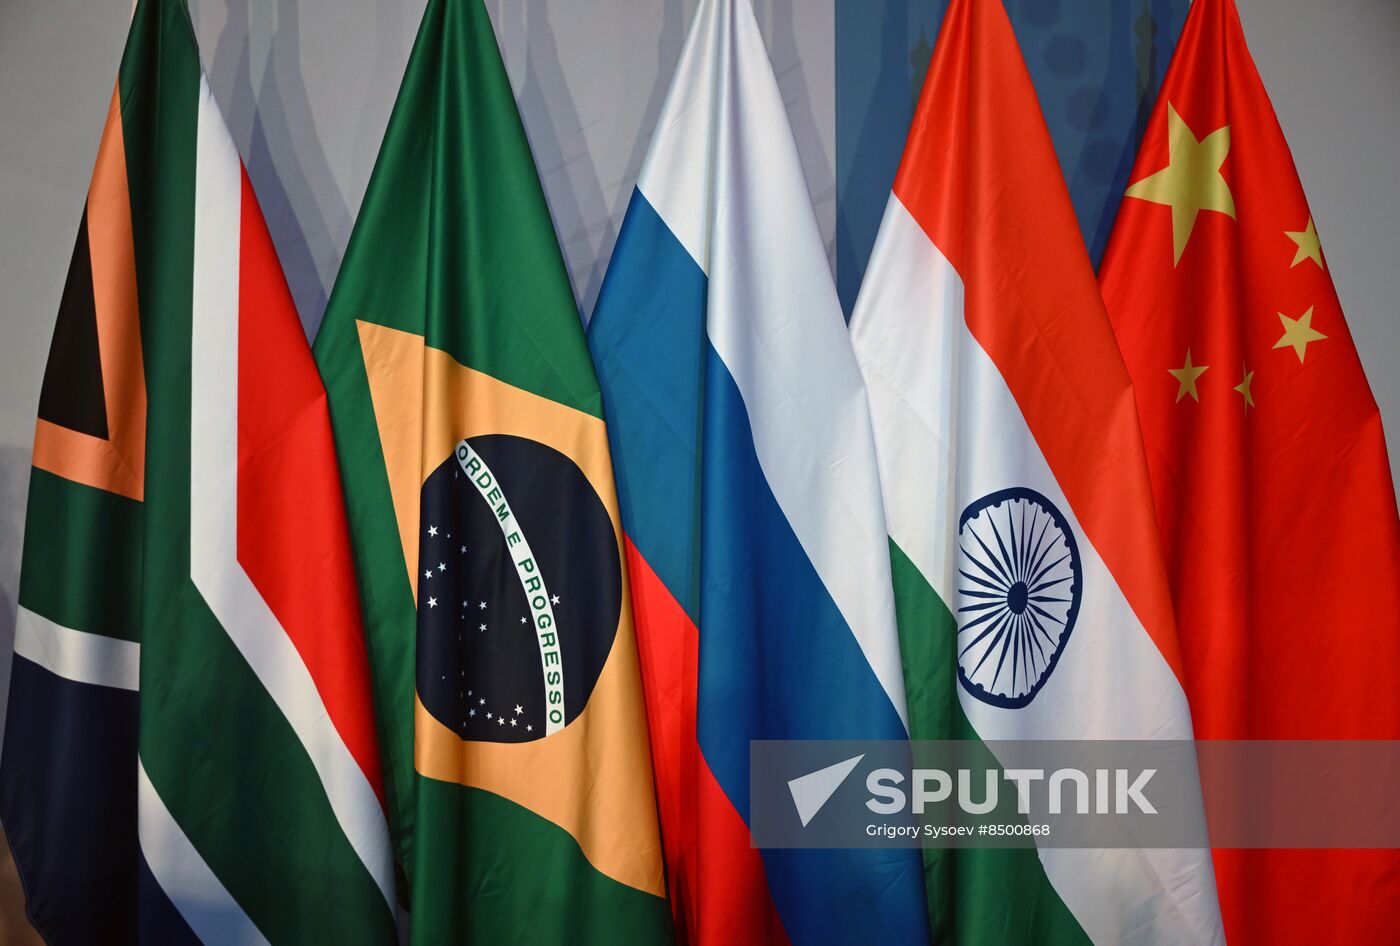 South Africa BRICS Summit